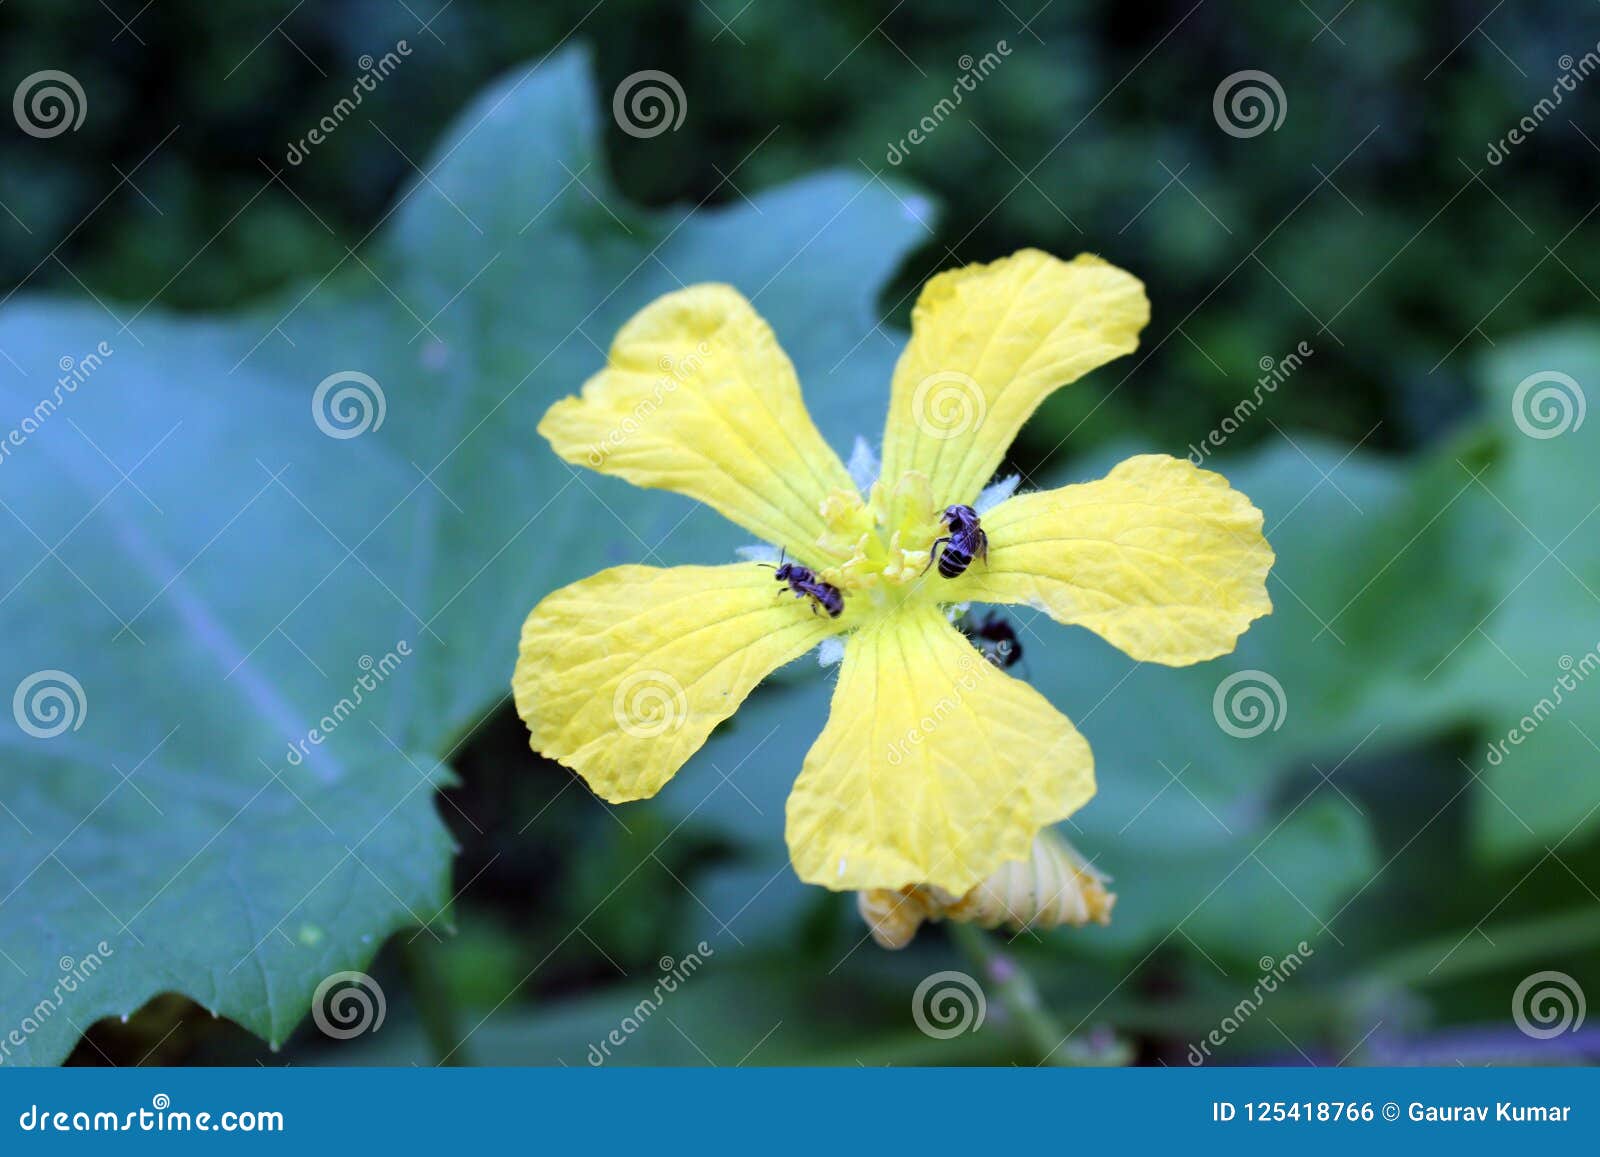 bees on torai vegetable flower